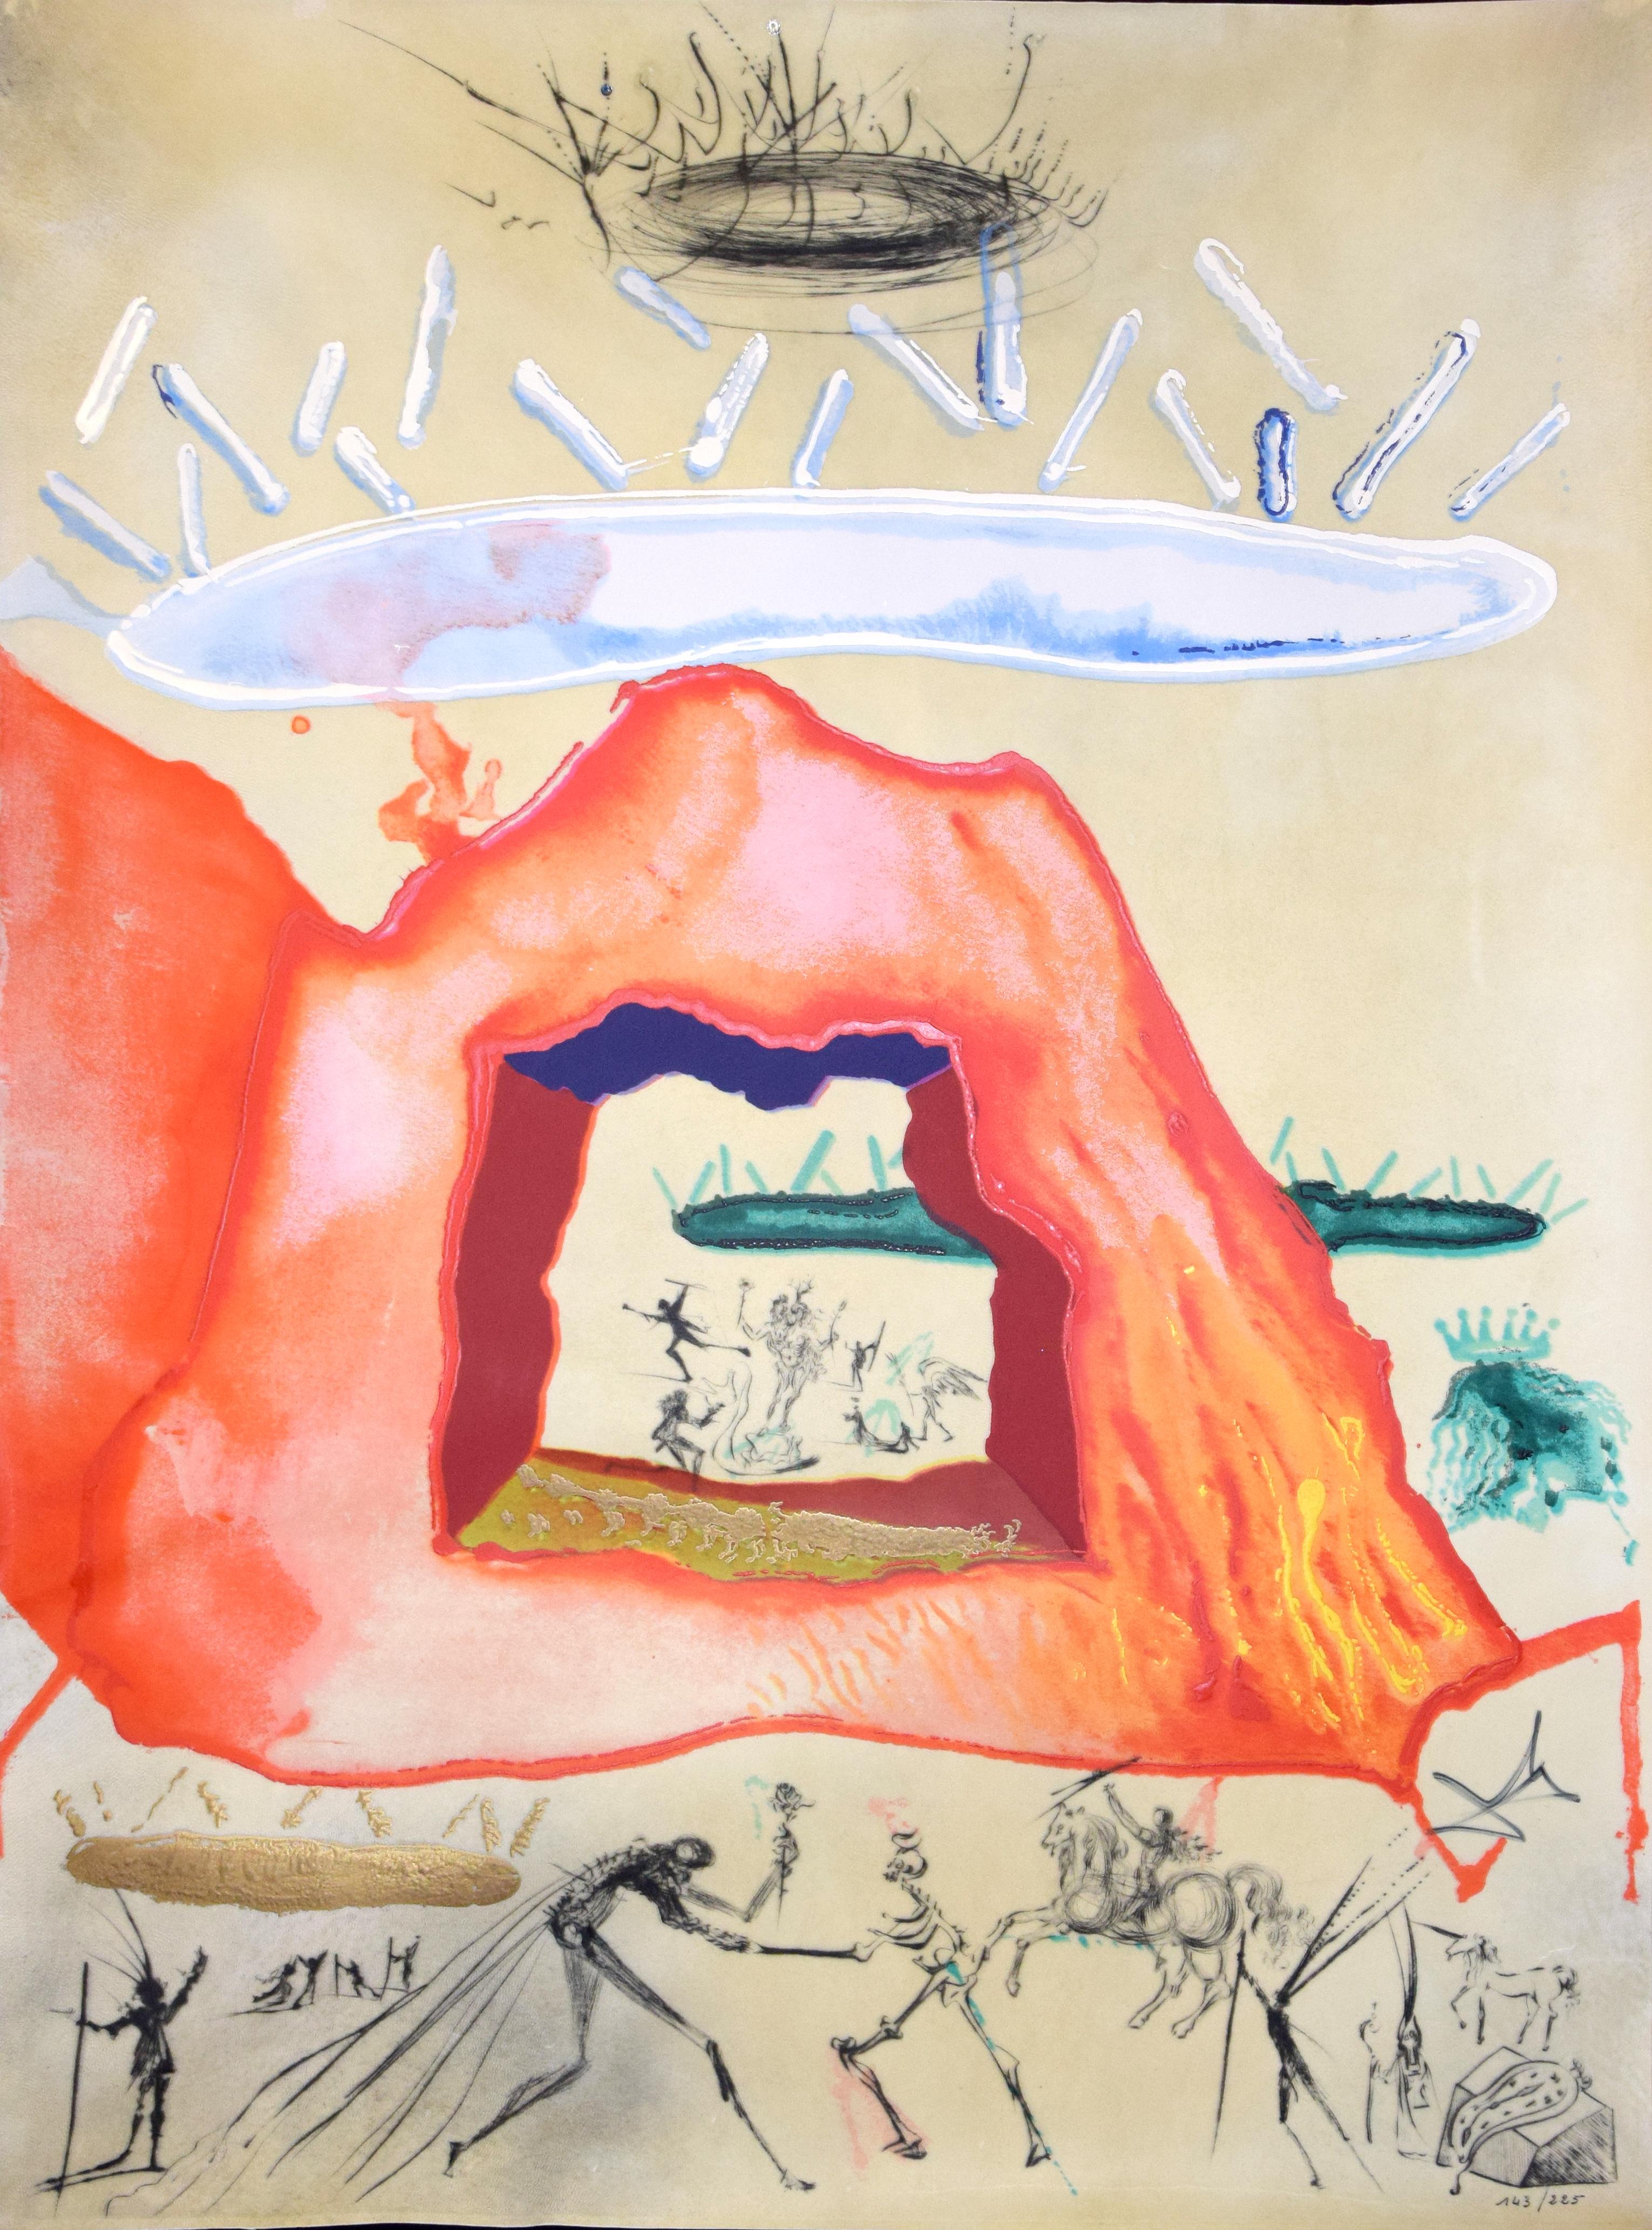 Le Creuset Philosophal - Original Mixed Media by Salvador Dalì - 1976 - Mixed Media Art by Salvador Dalí